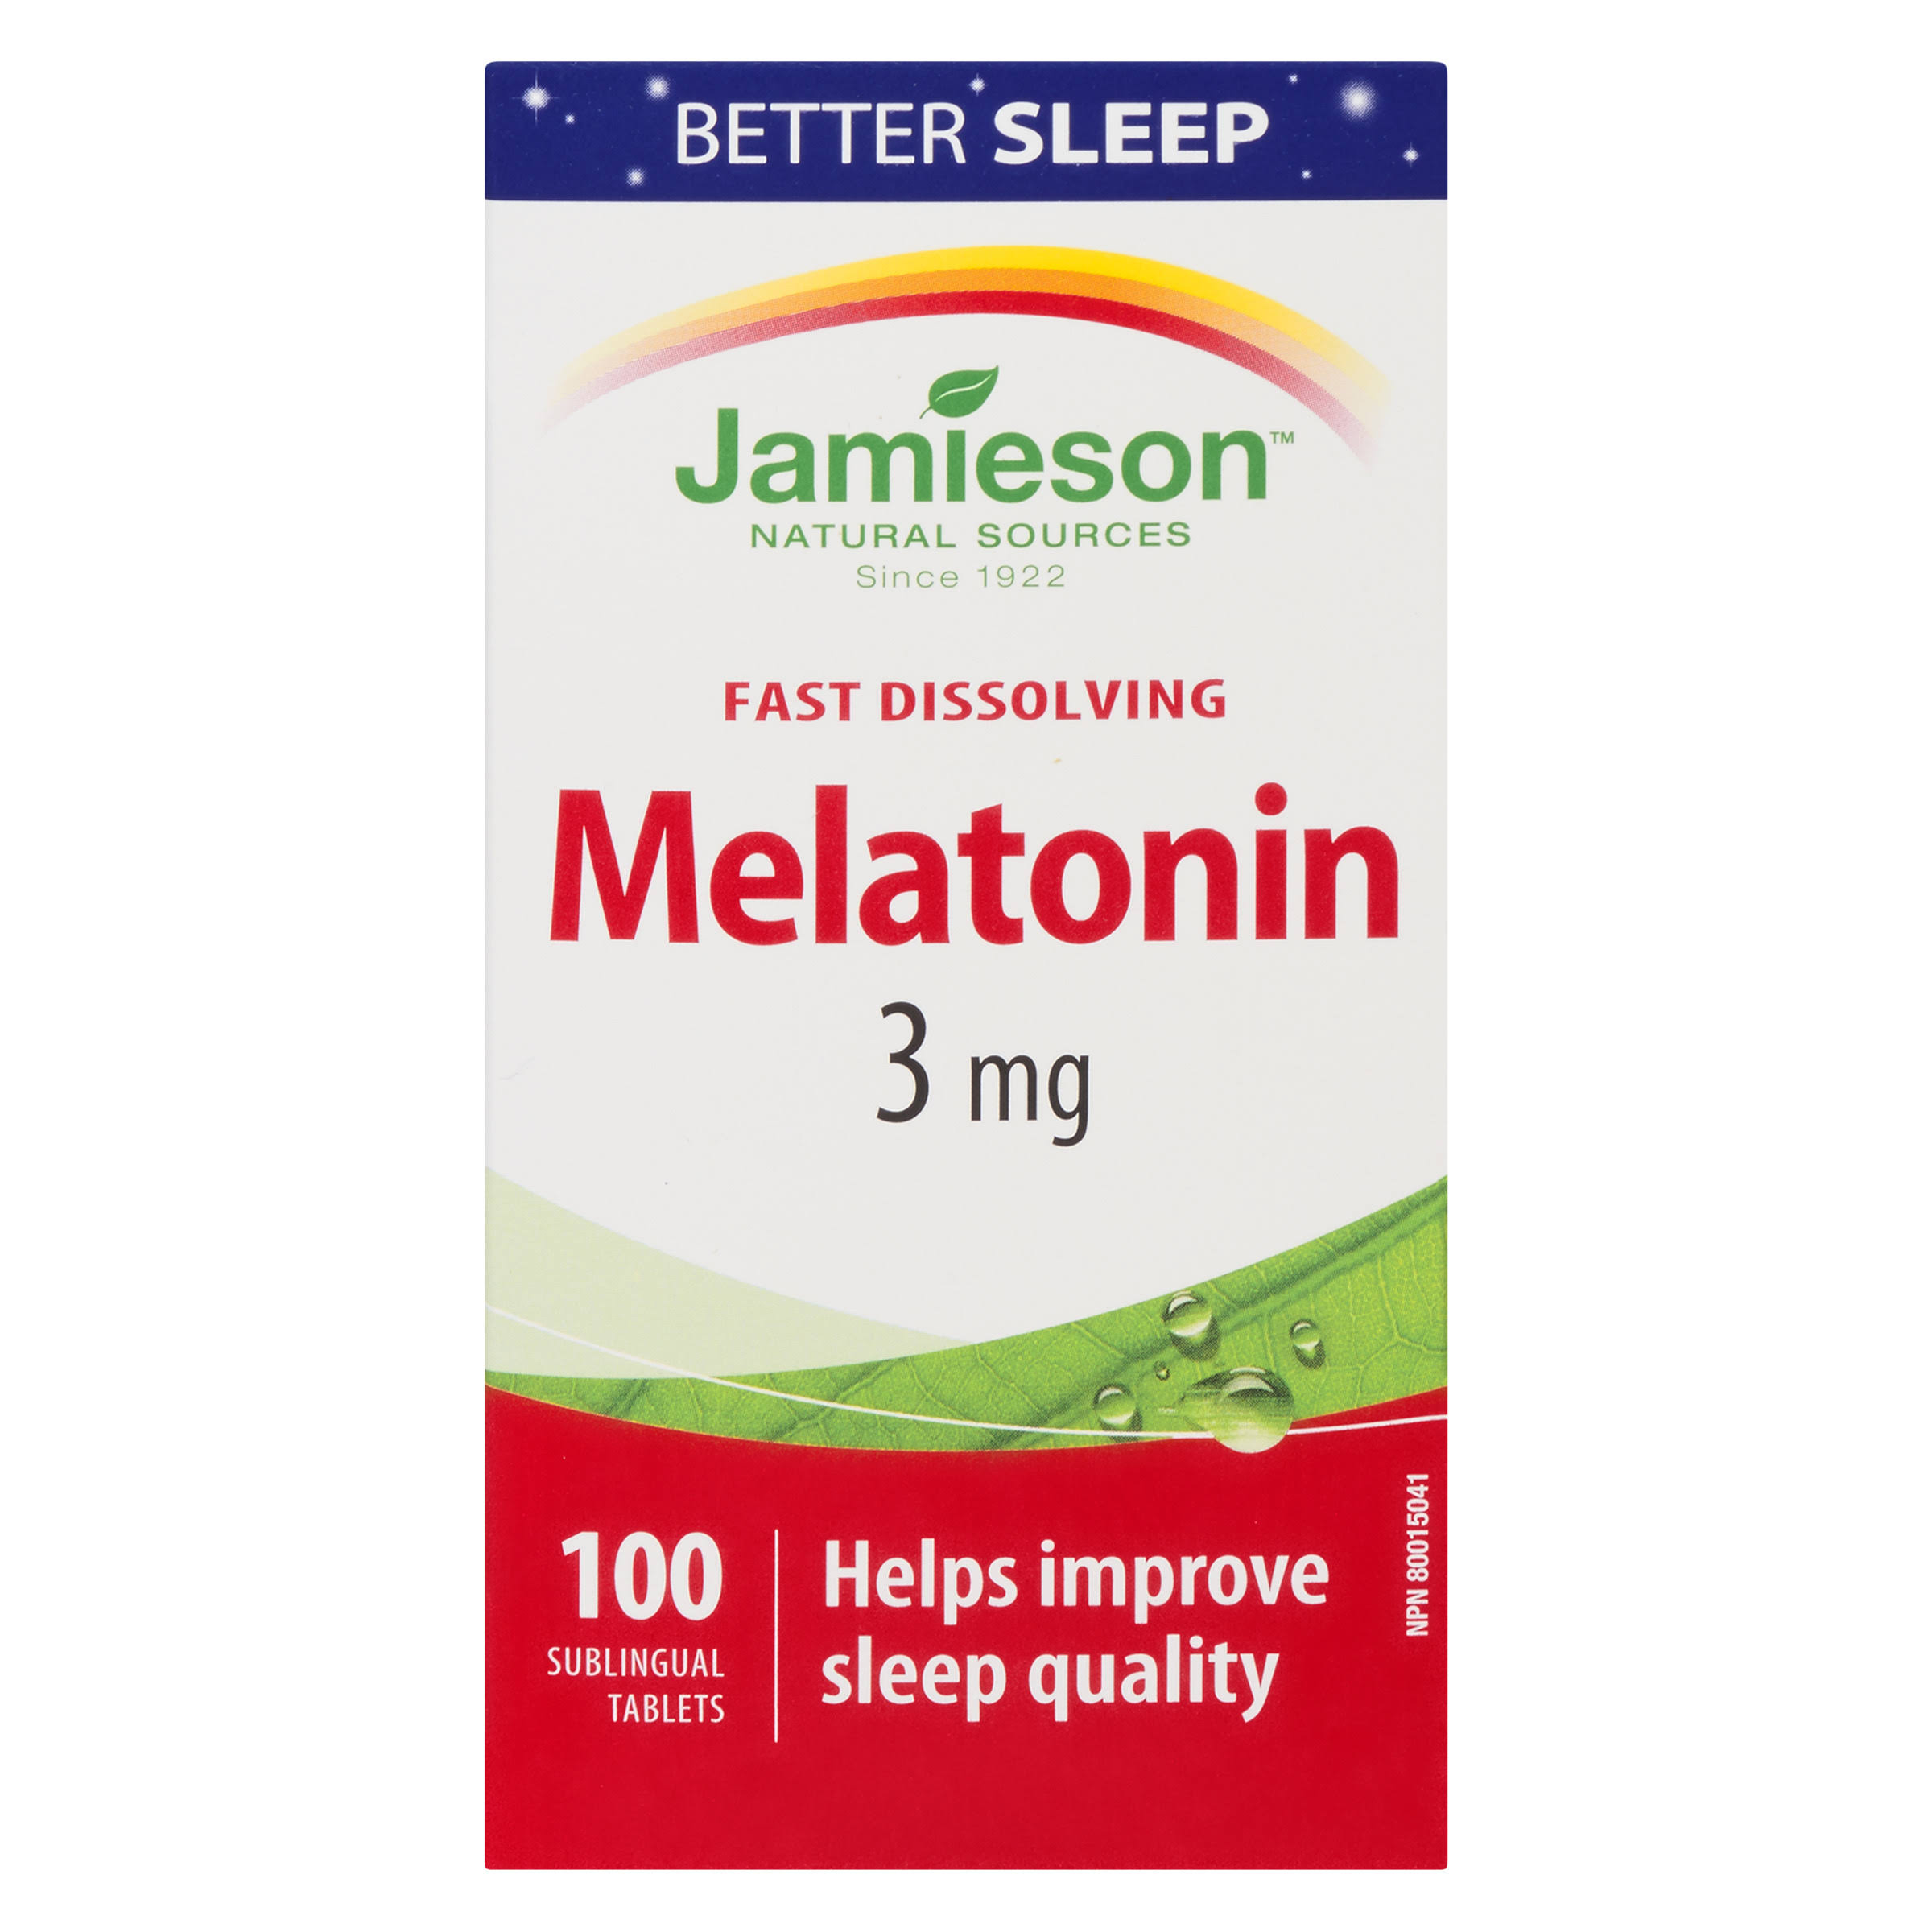 Jamieson Melatonin Sublingual Tablets - 100ct